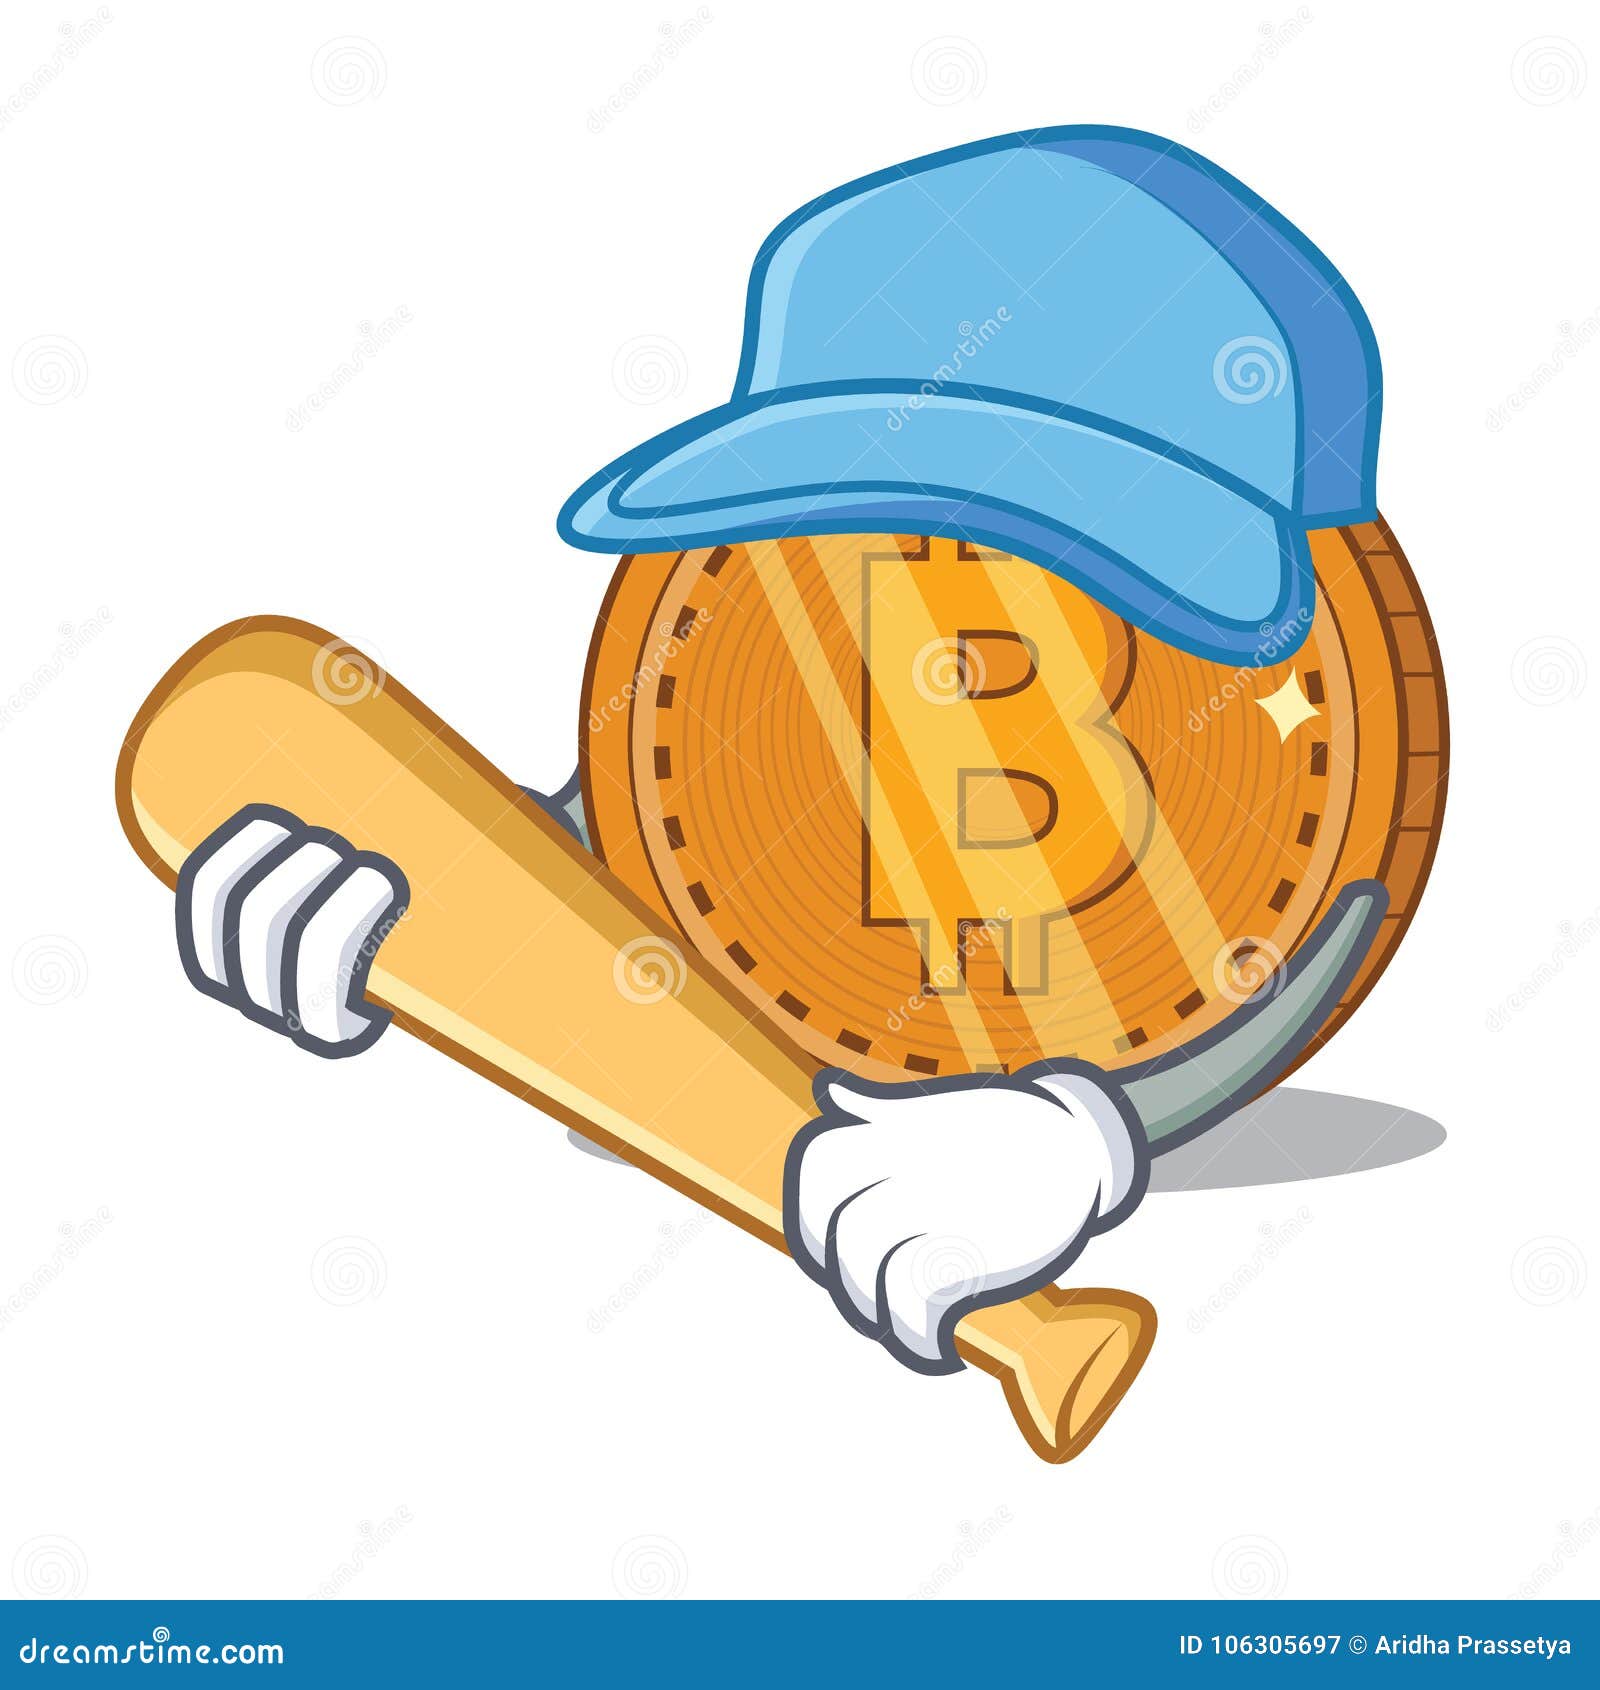 Playing Baseball Bitcoin Coin Character Cartoon Stock ...